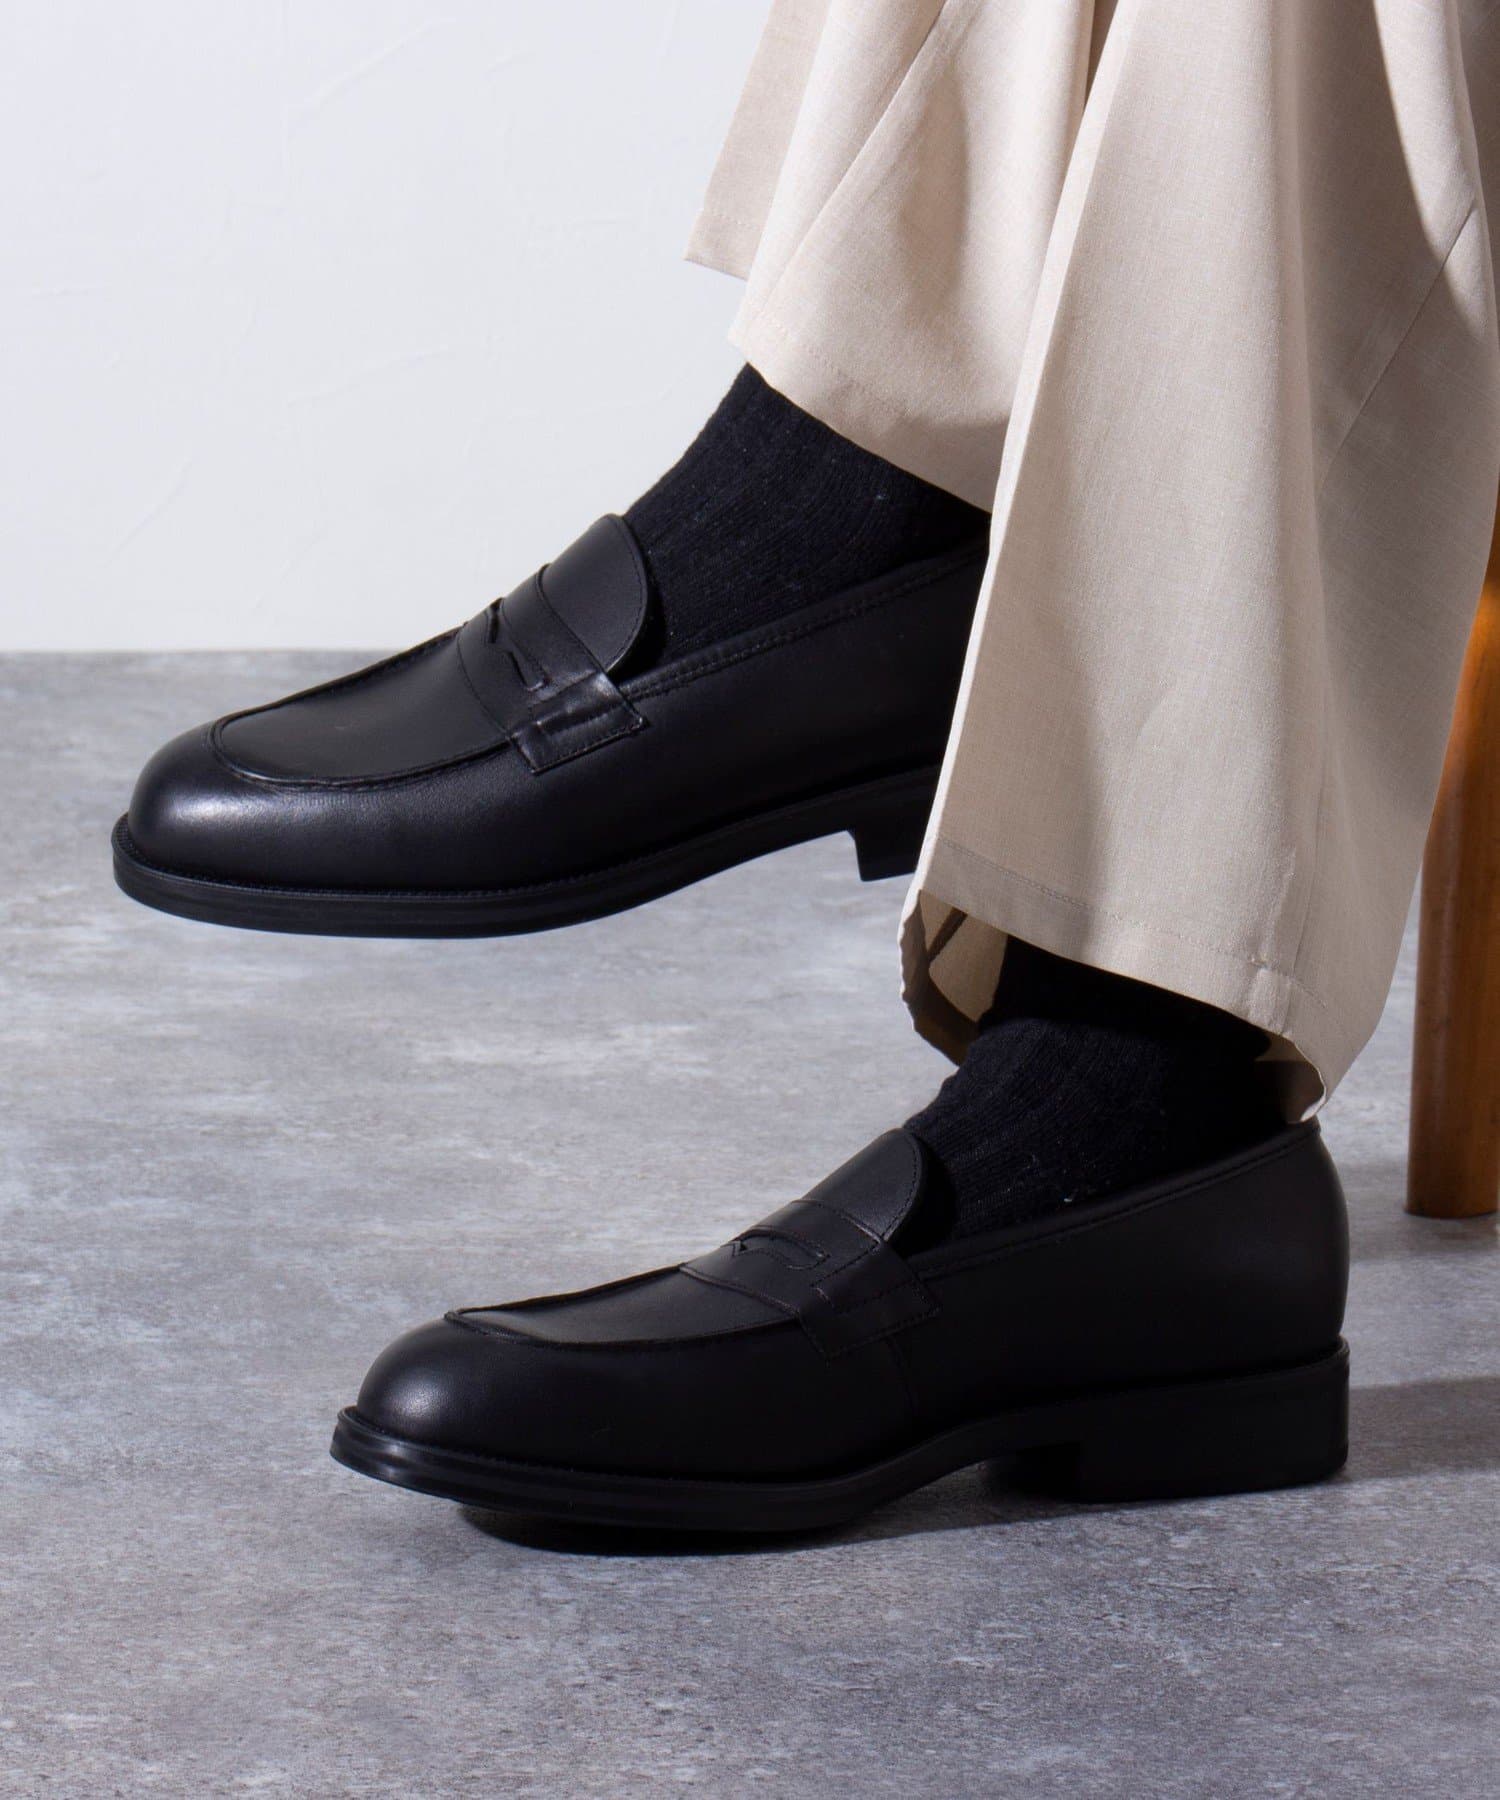 KLEMAN】DALIOR/ダリオール コインローファー 革靴 レザー | FREDY 